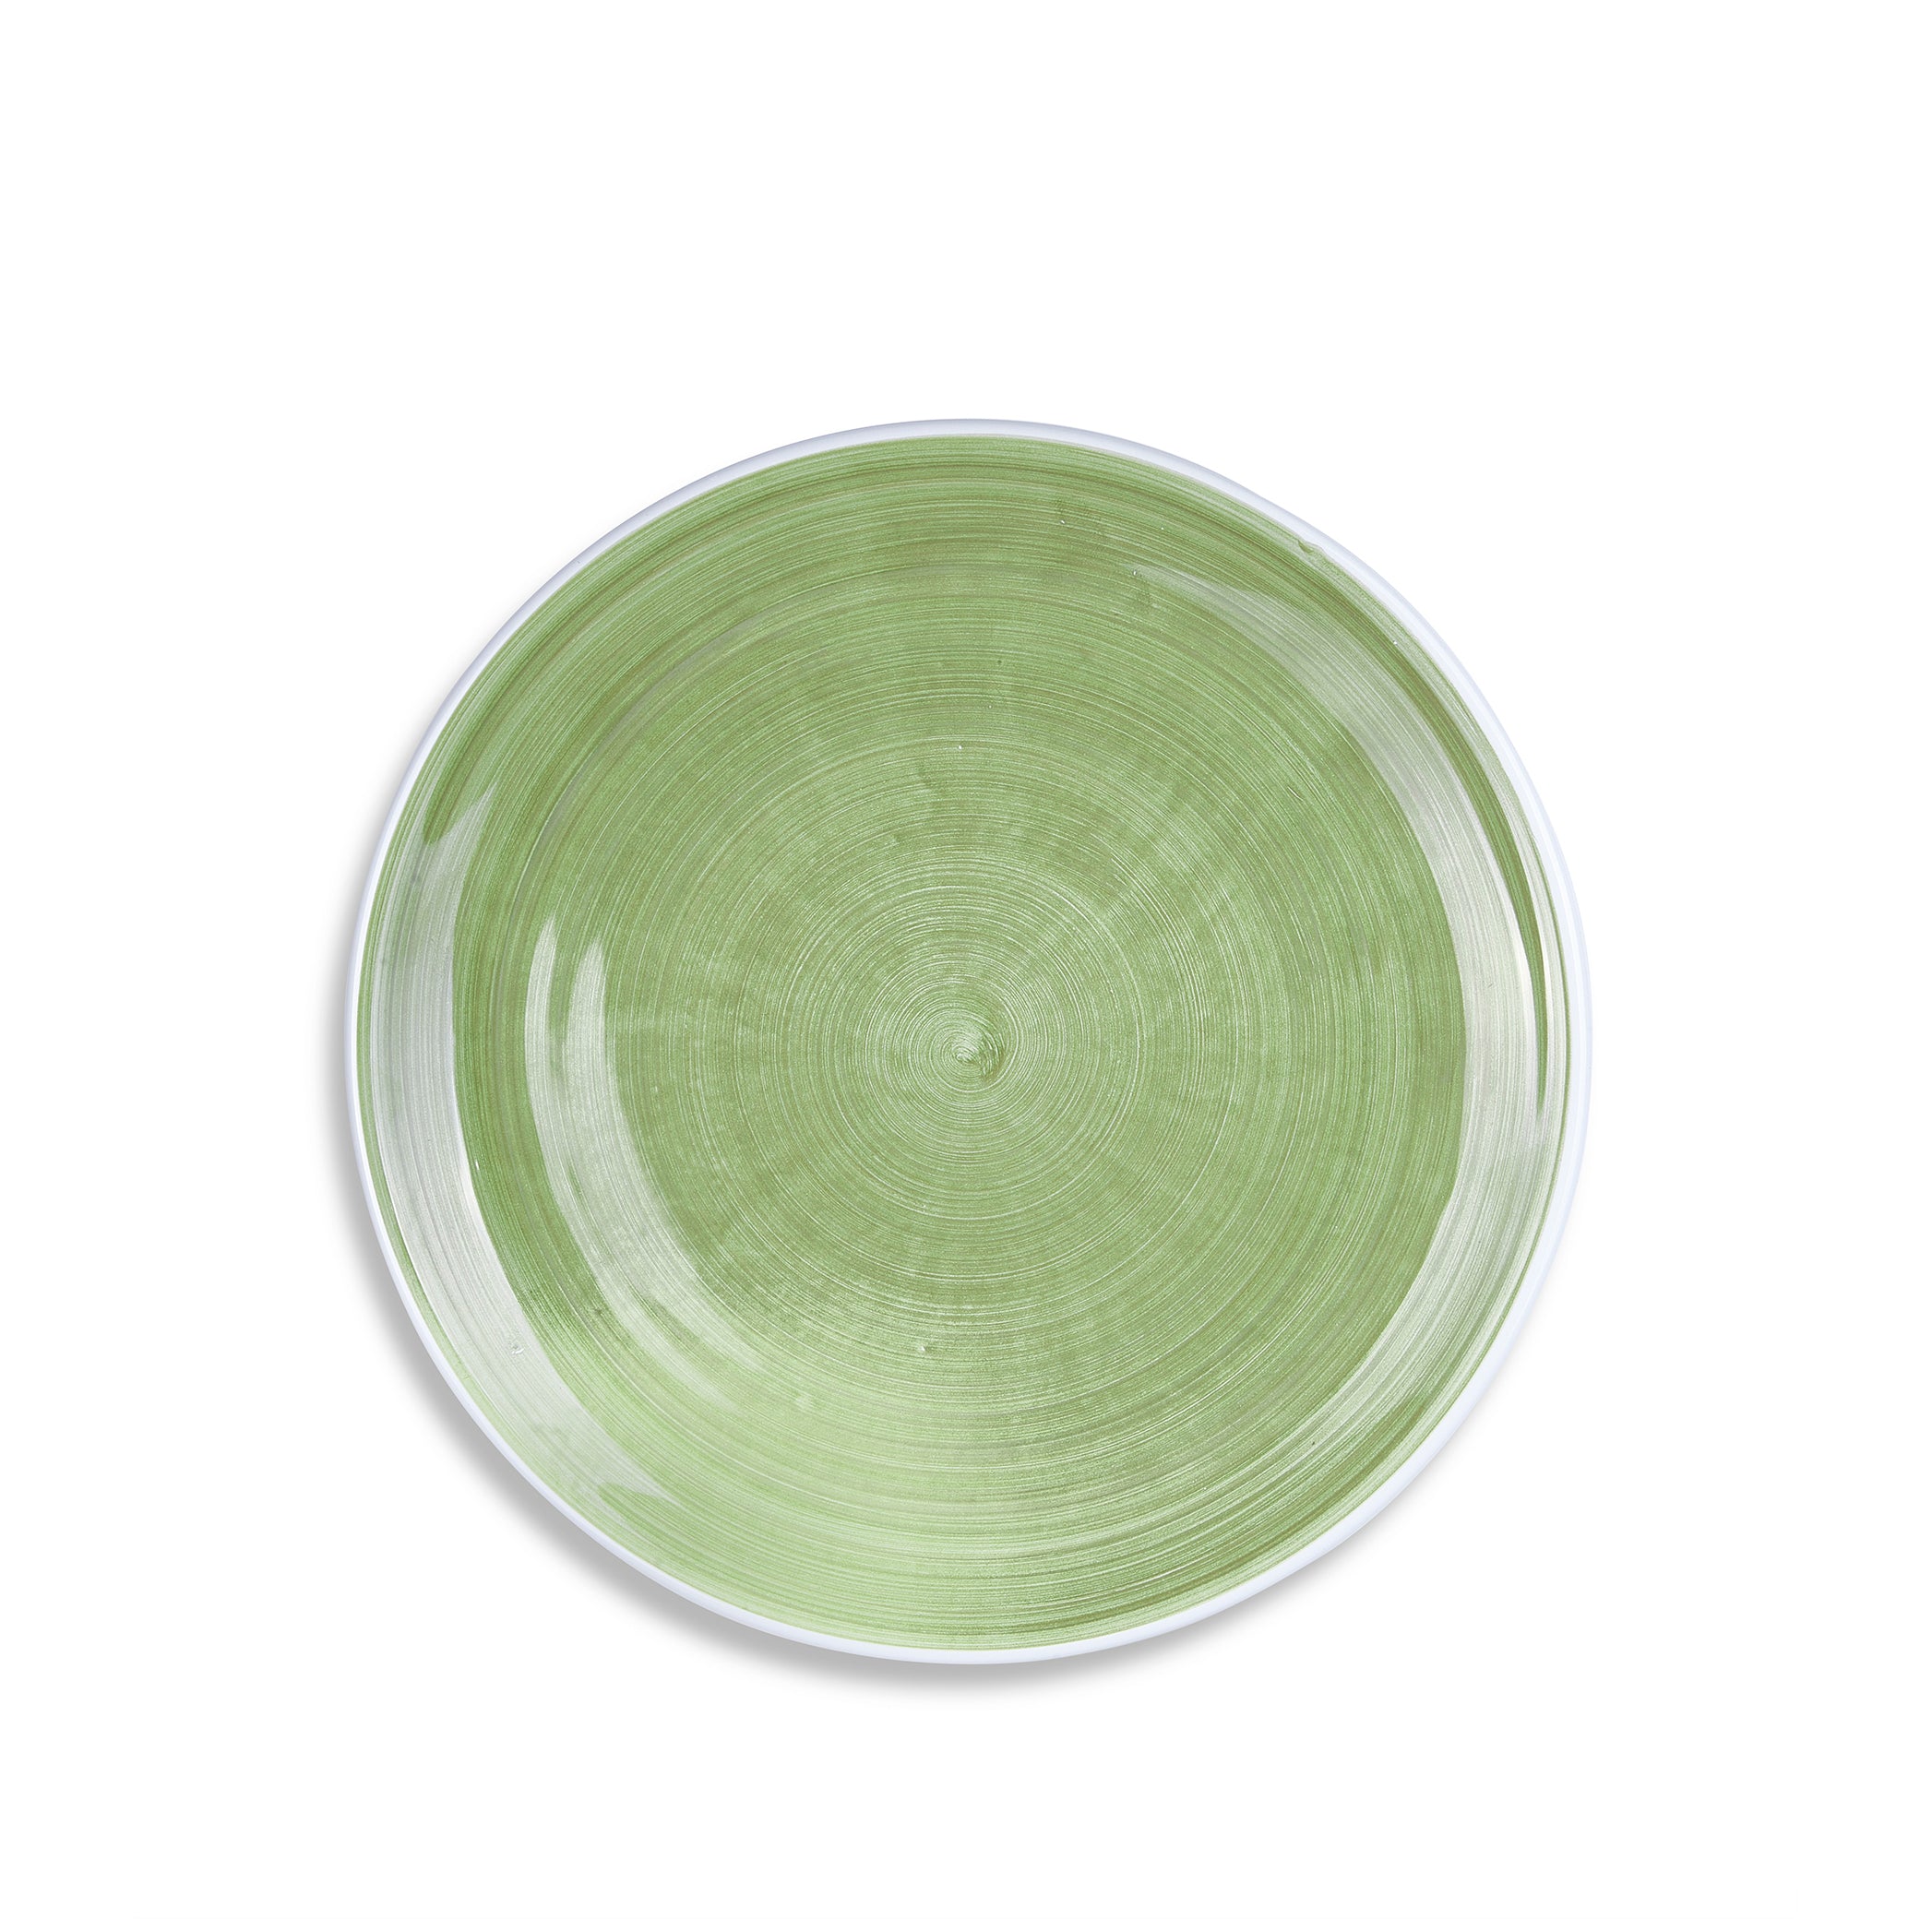 S&B 'Brushed' Ceramic Dinner Plate in Season Green, 28cm